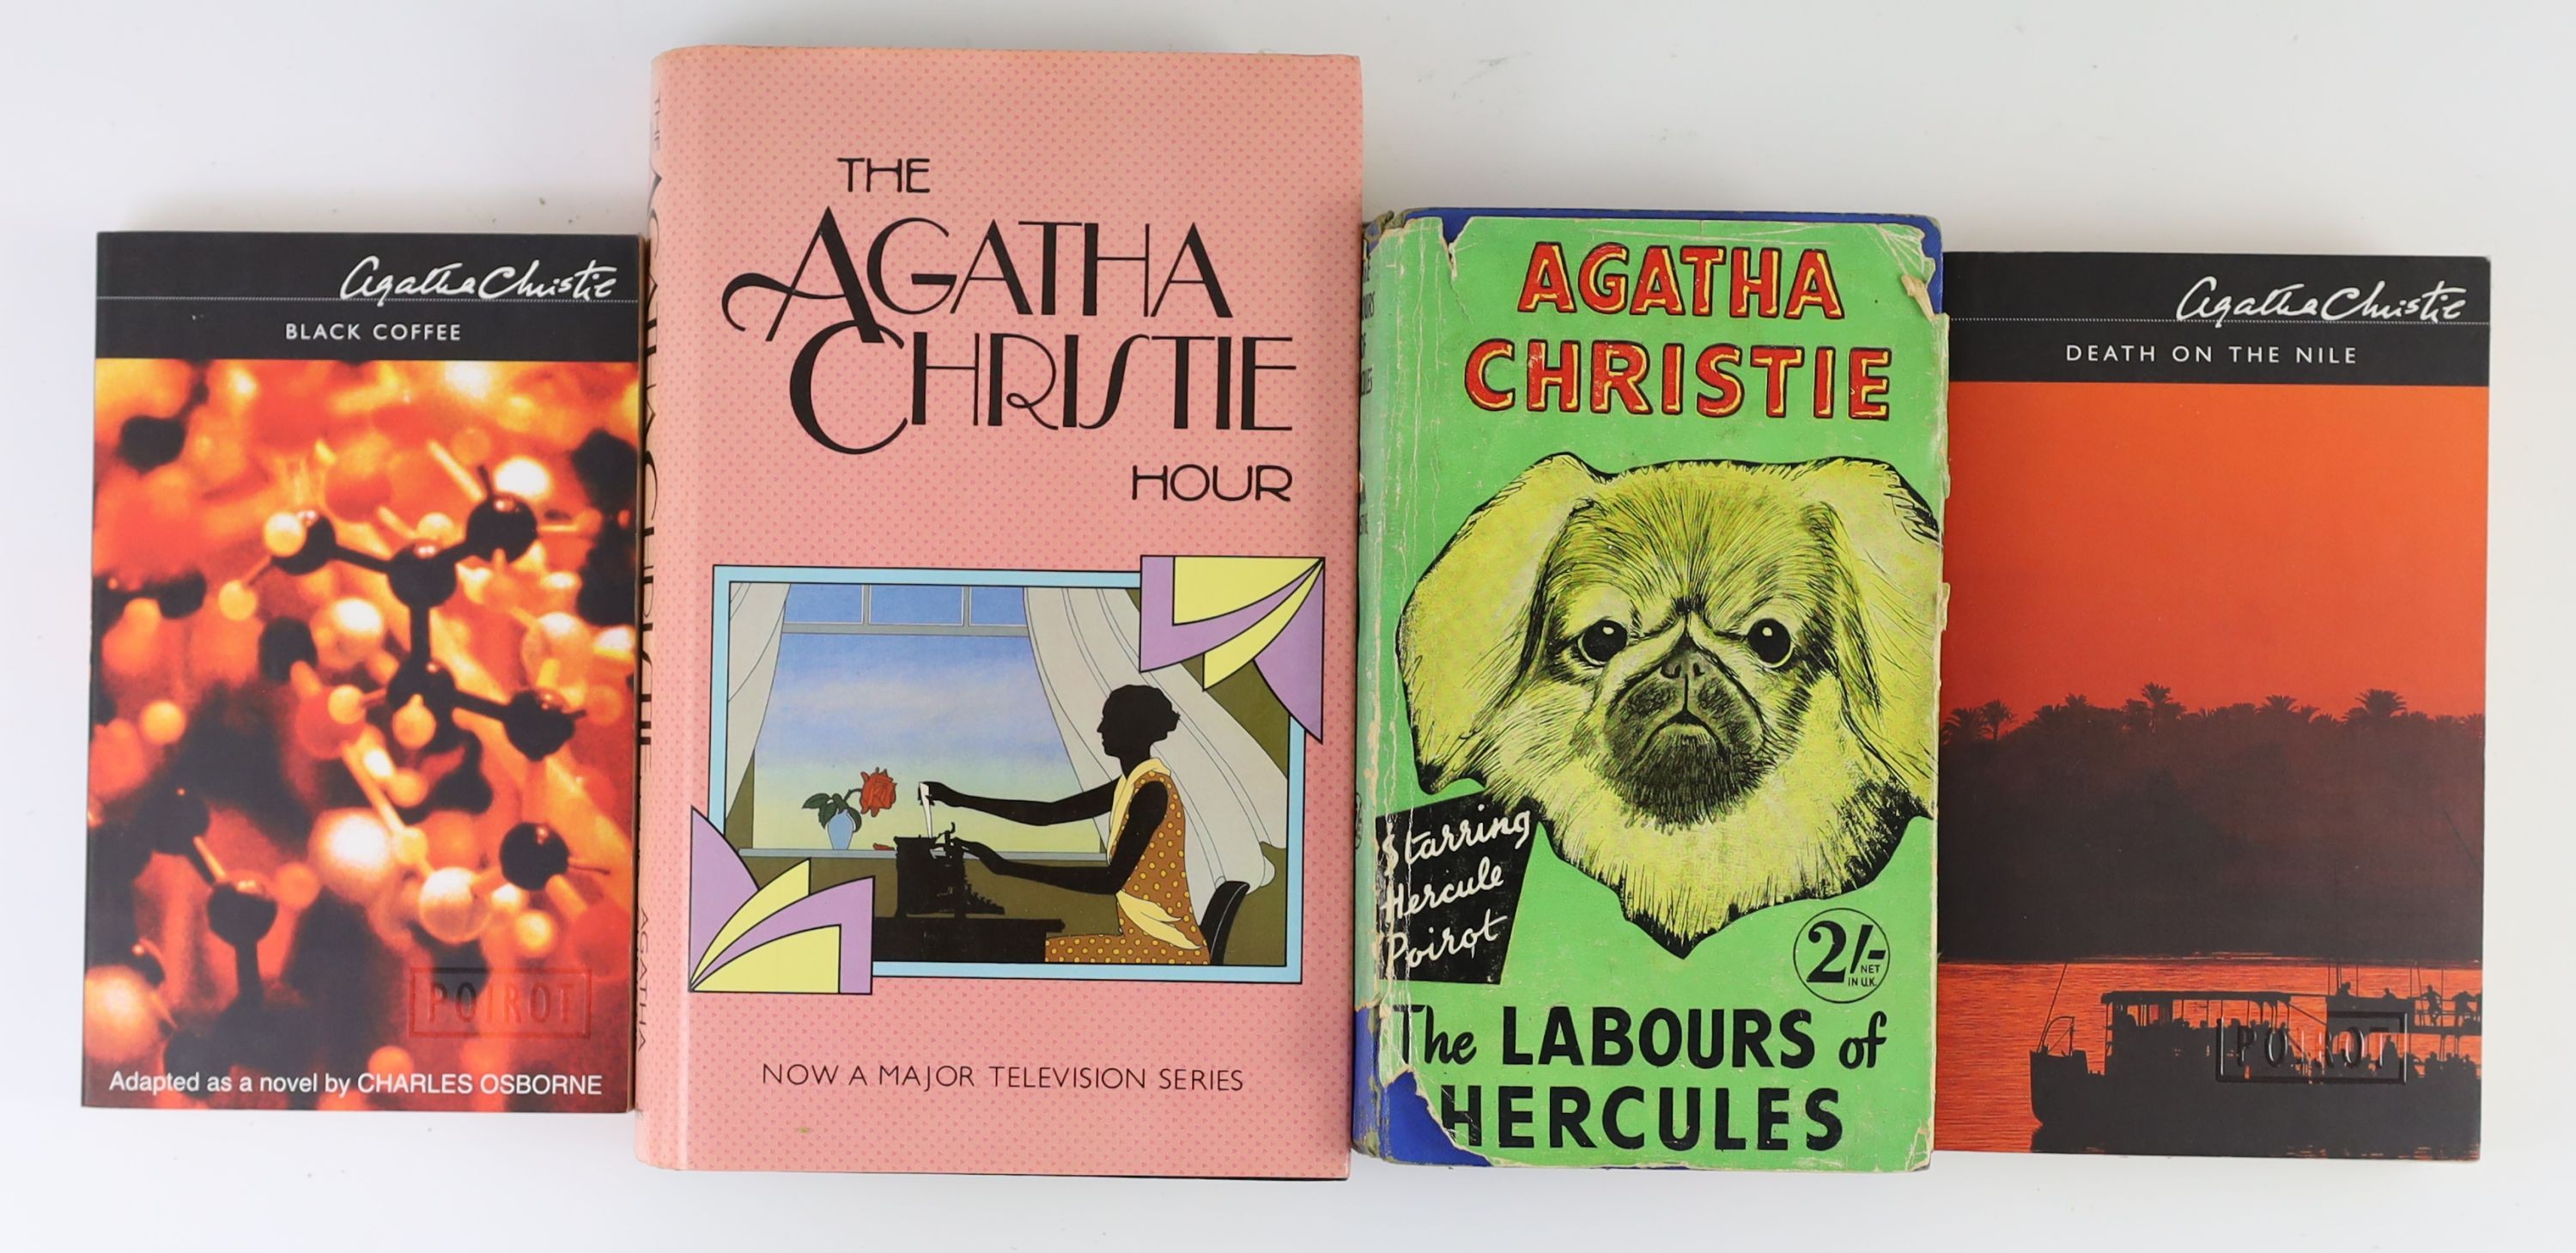 Christie, Agatha - Twenty one works - The Pale Horse, 1st edition